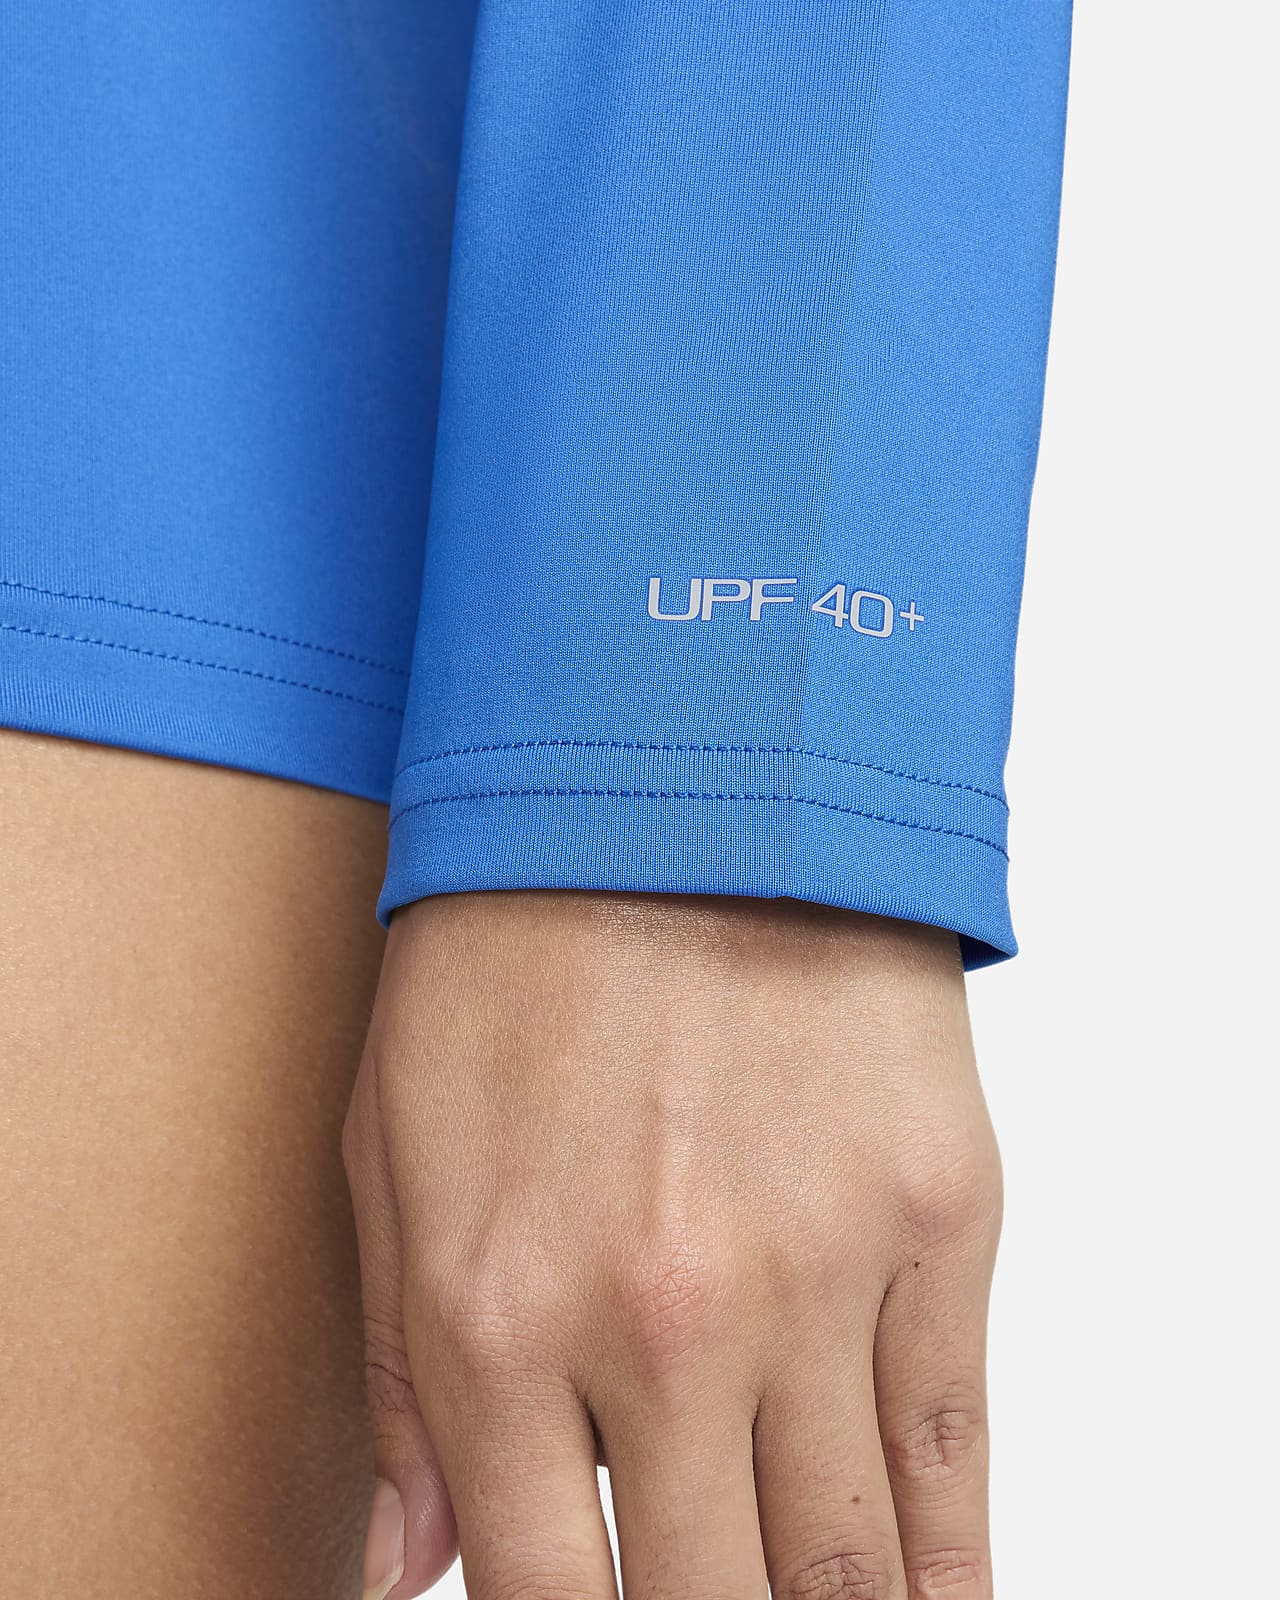 Light Blue Long-Sleeve Swim Shirts for Big & Tall Men H2O Sport Tech.